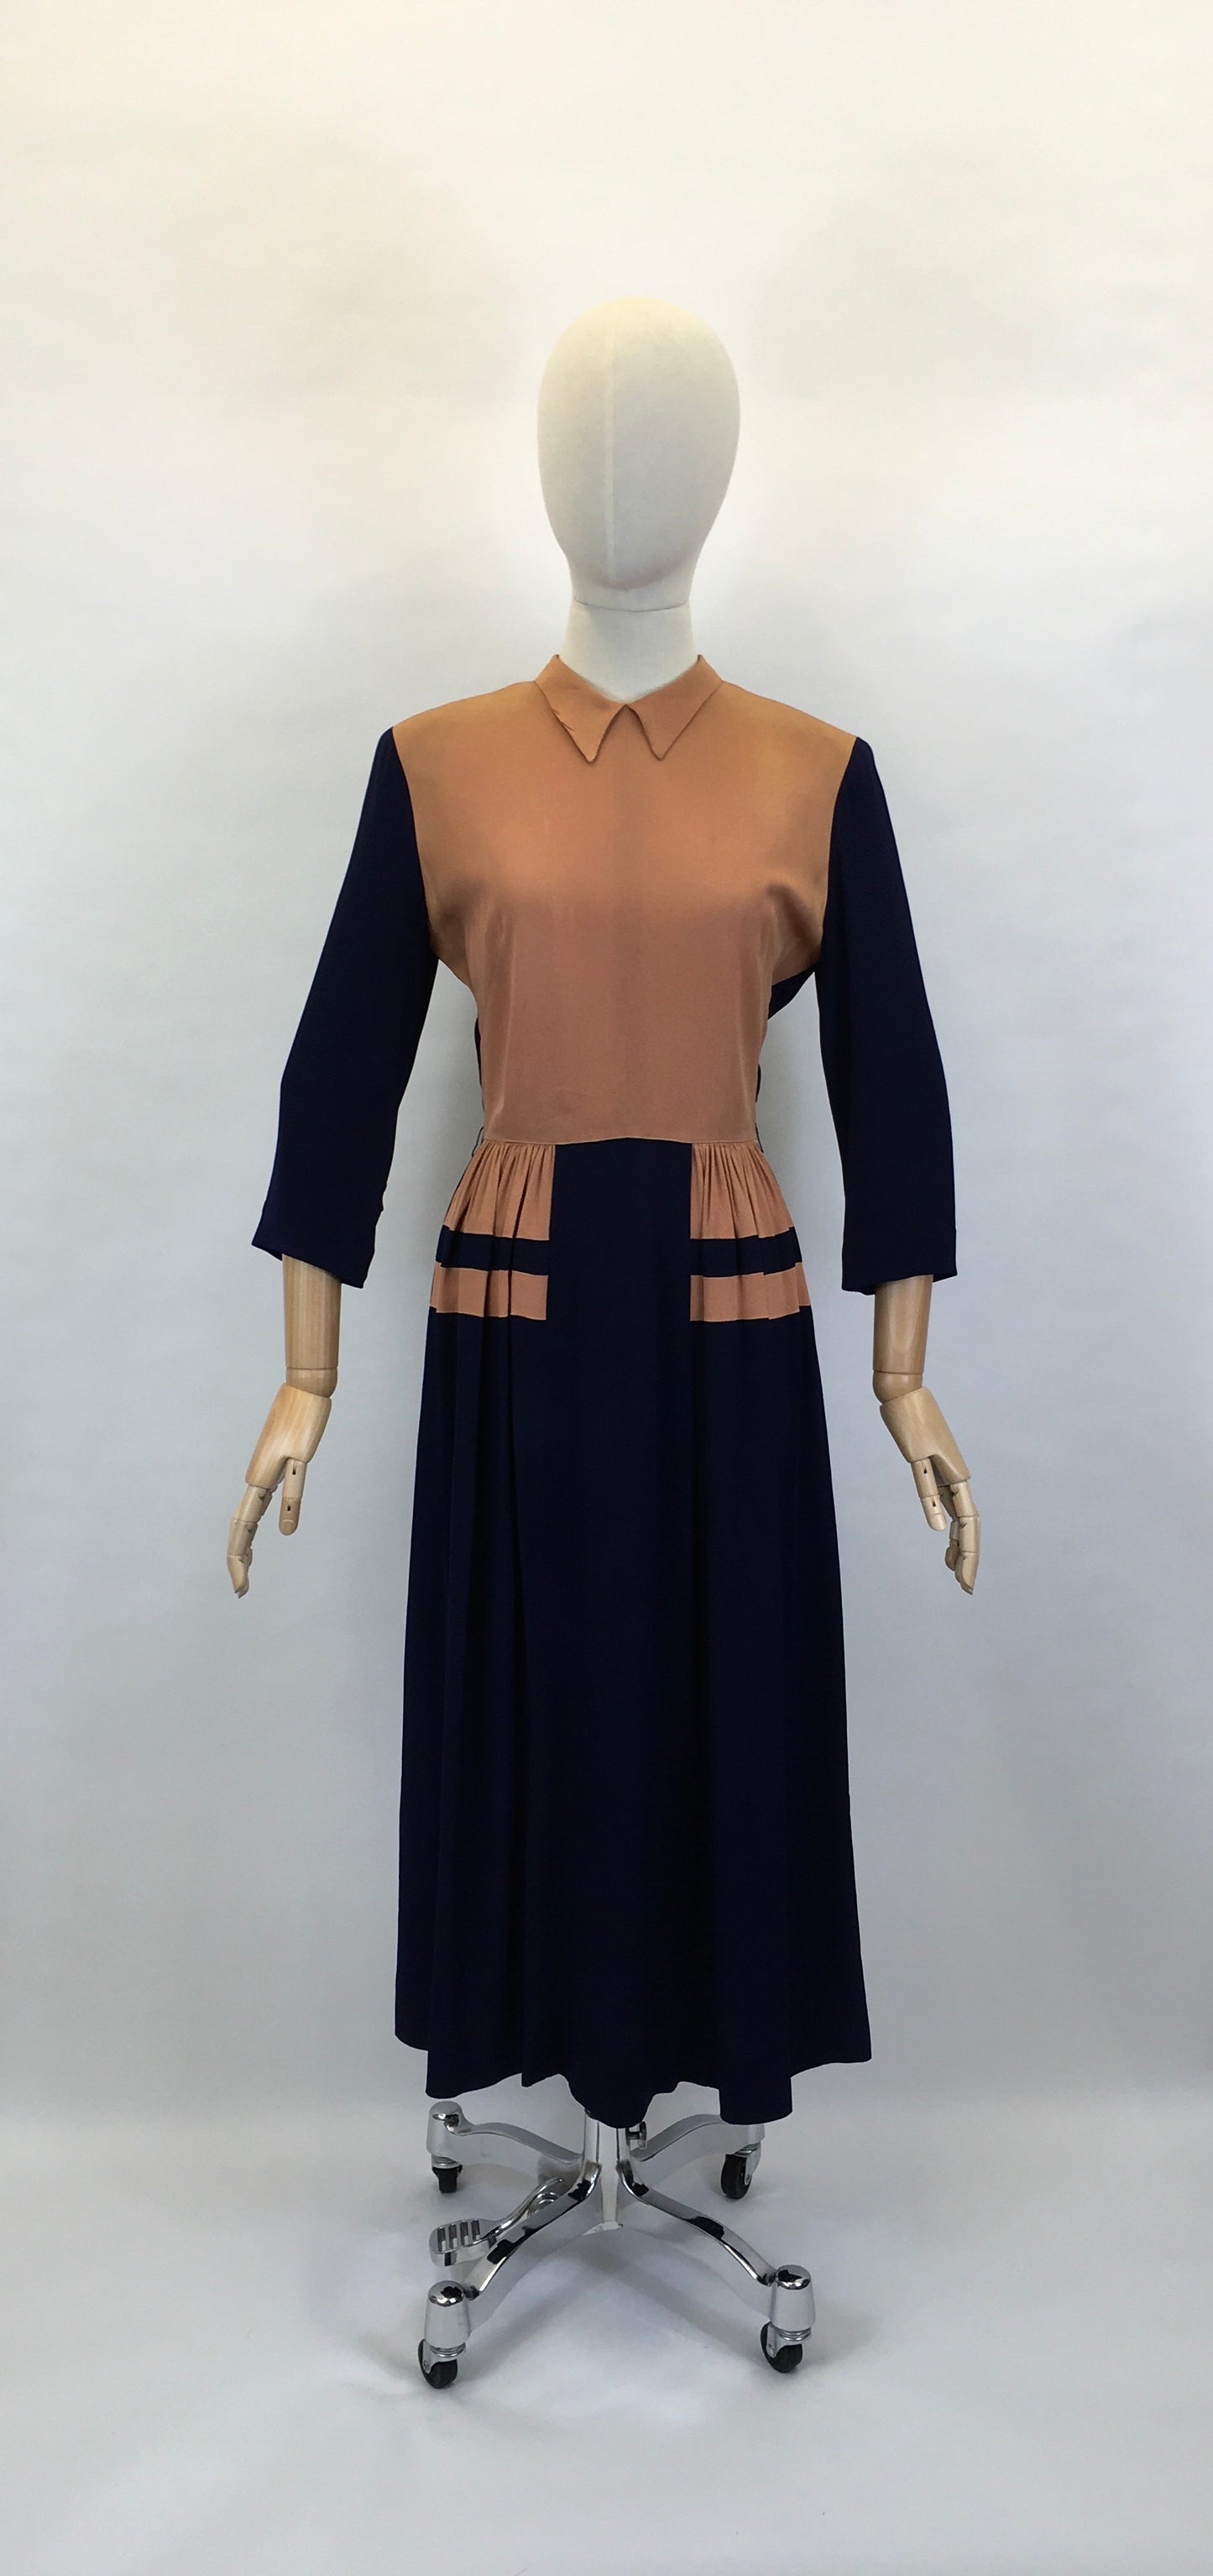 Original 1940’s SENSATIONAL Rayon Crepe Colour Block Dress - In Navy Blue and Soft Cinnamon